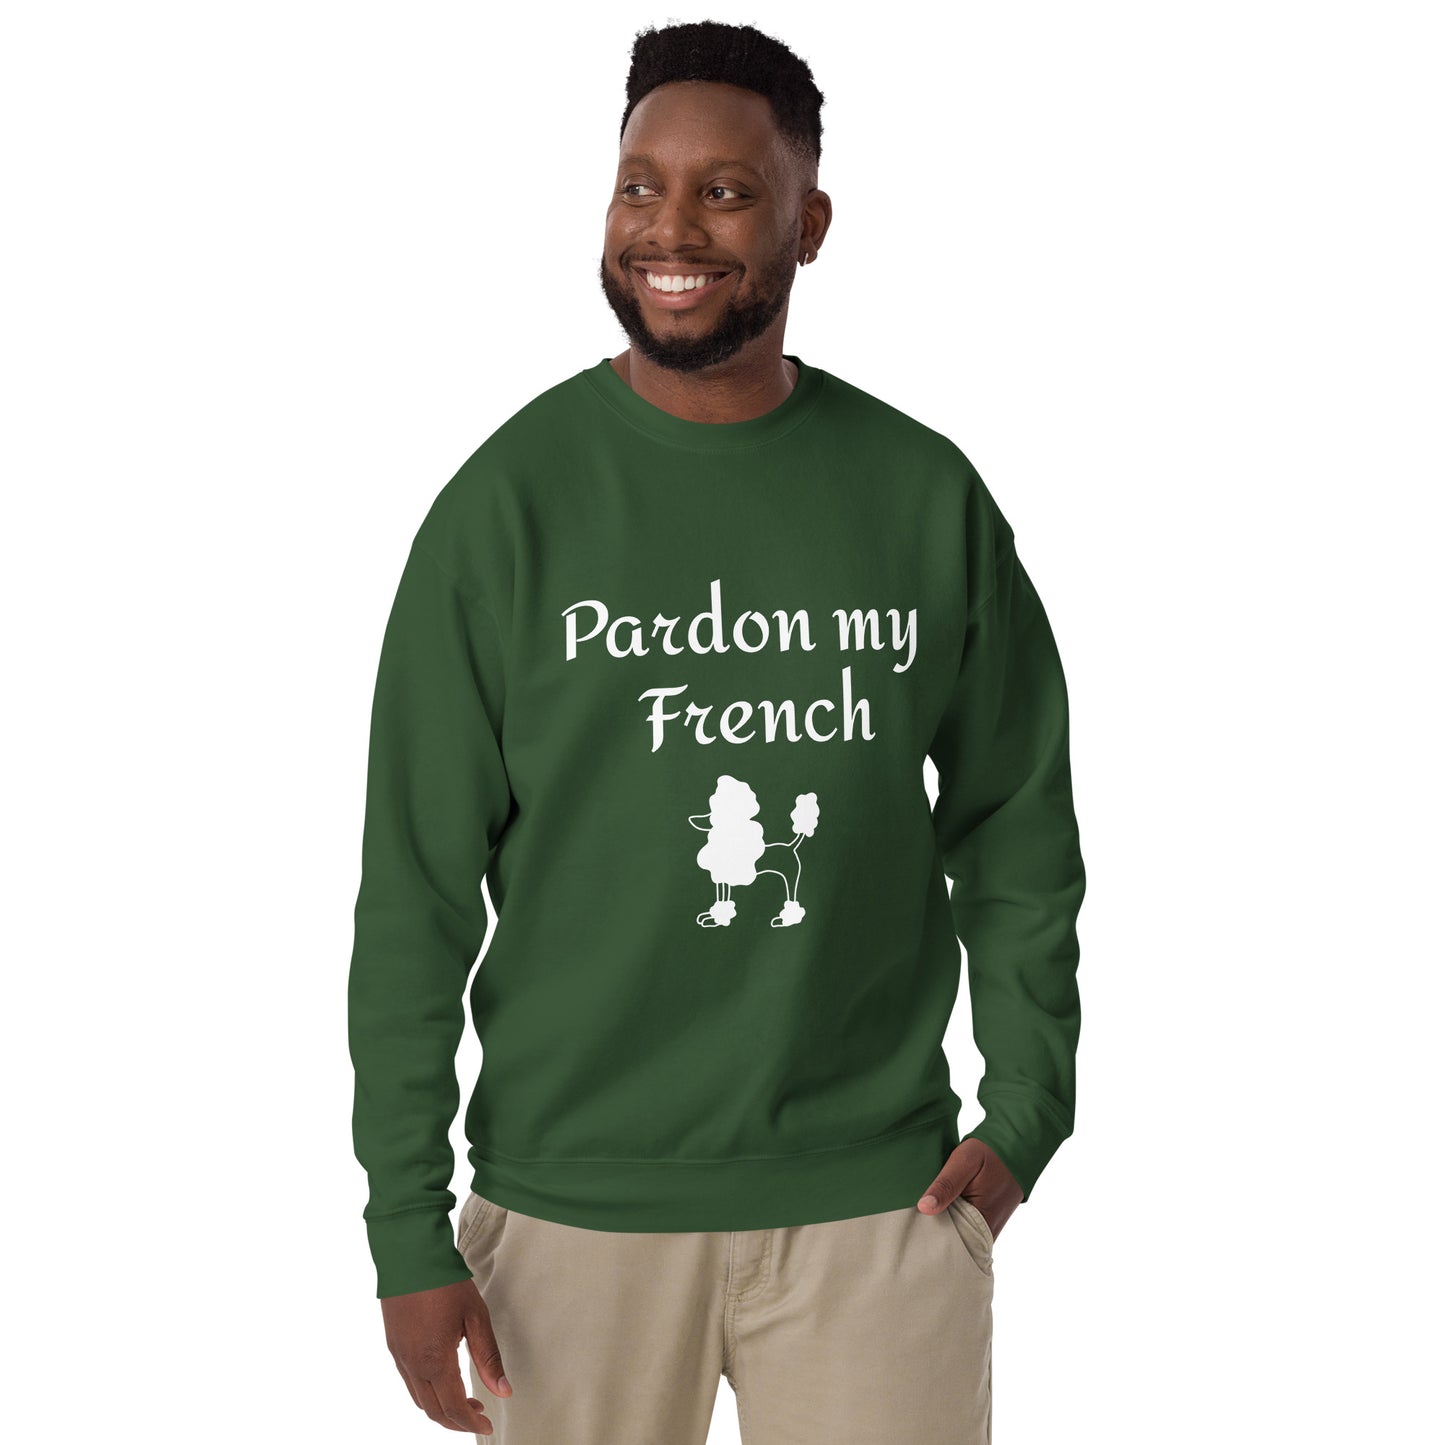 Pardon my French - Sweatshirt